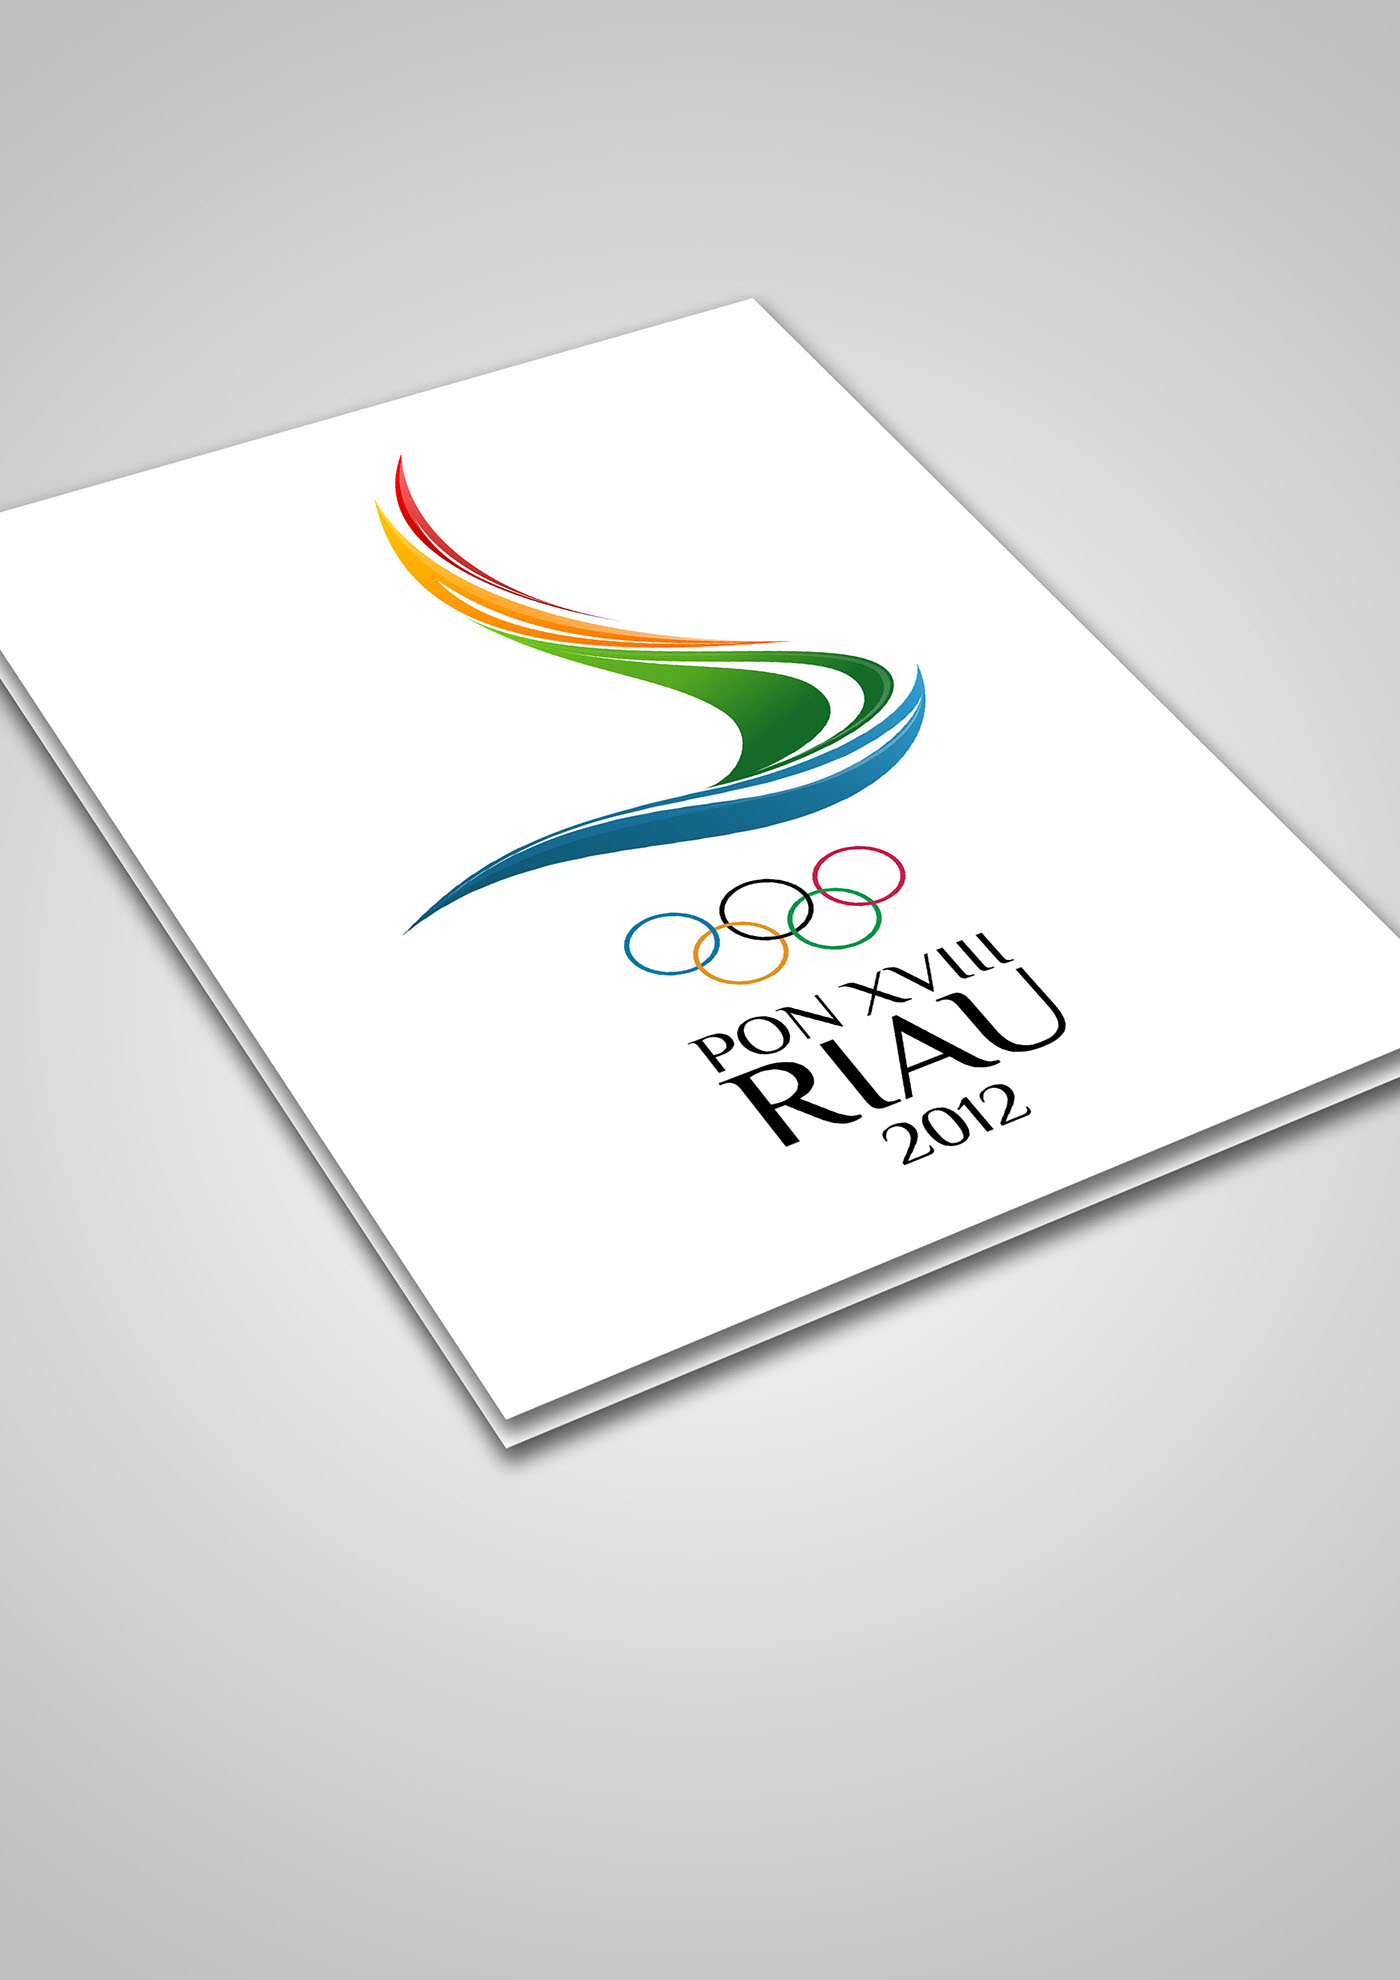 PON XVIII riau rebranding Event sports indonesia